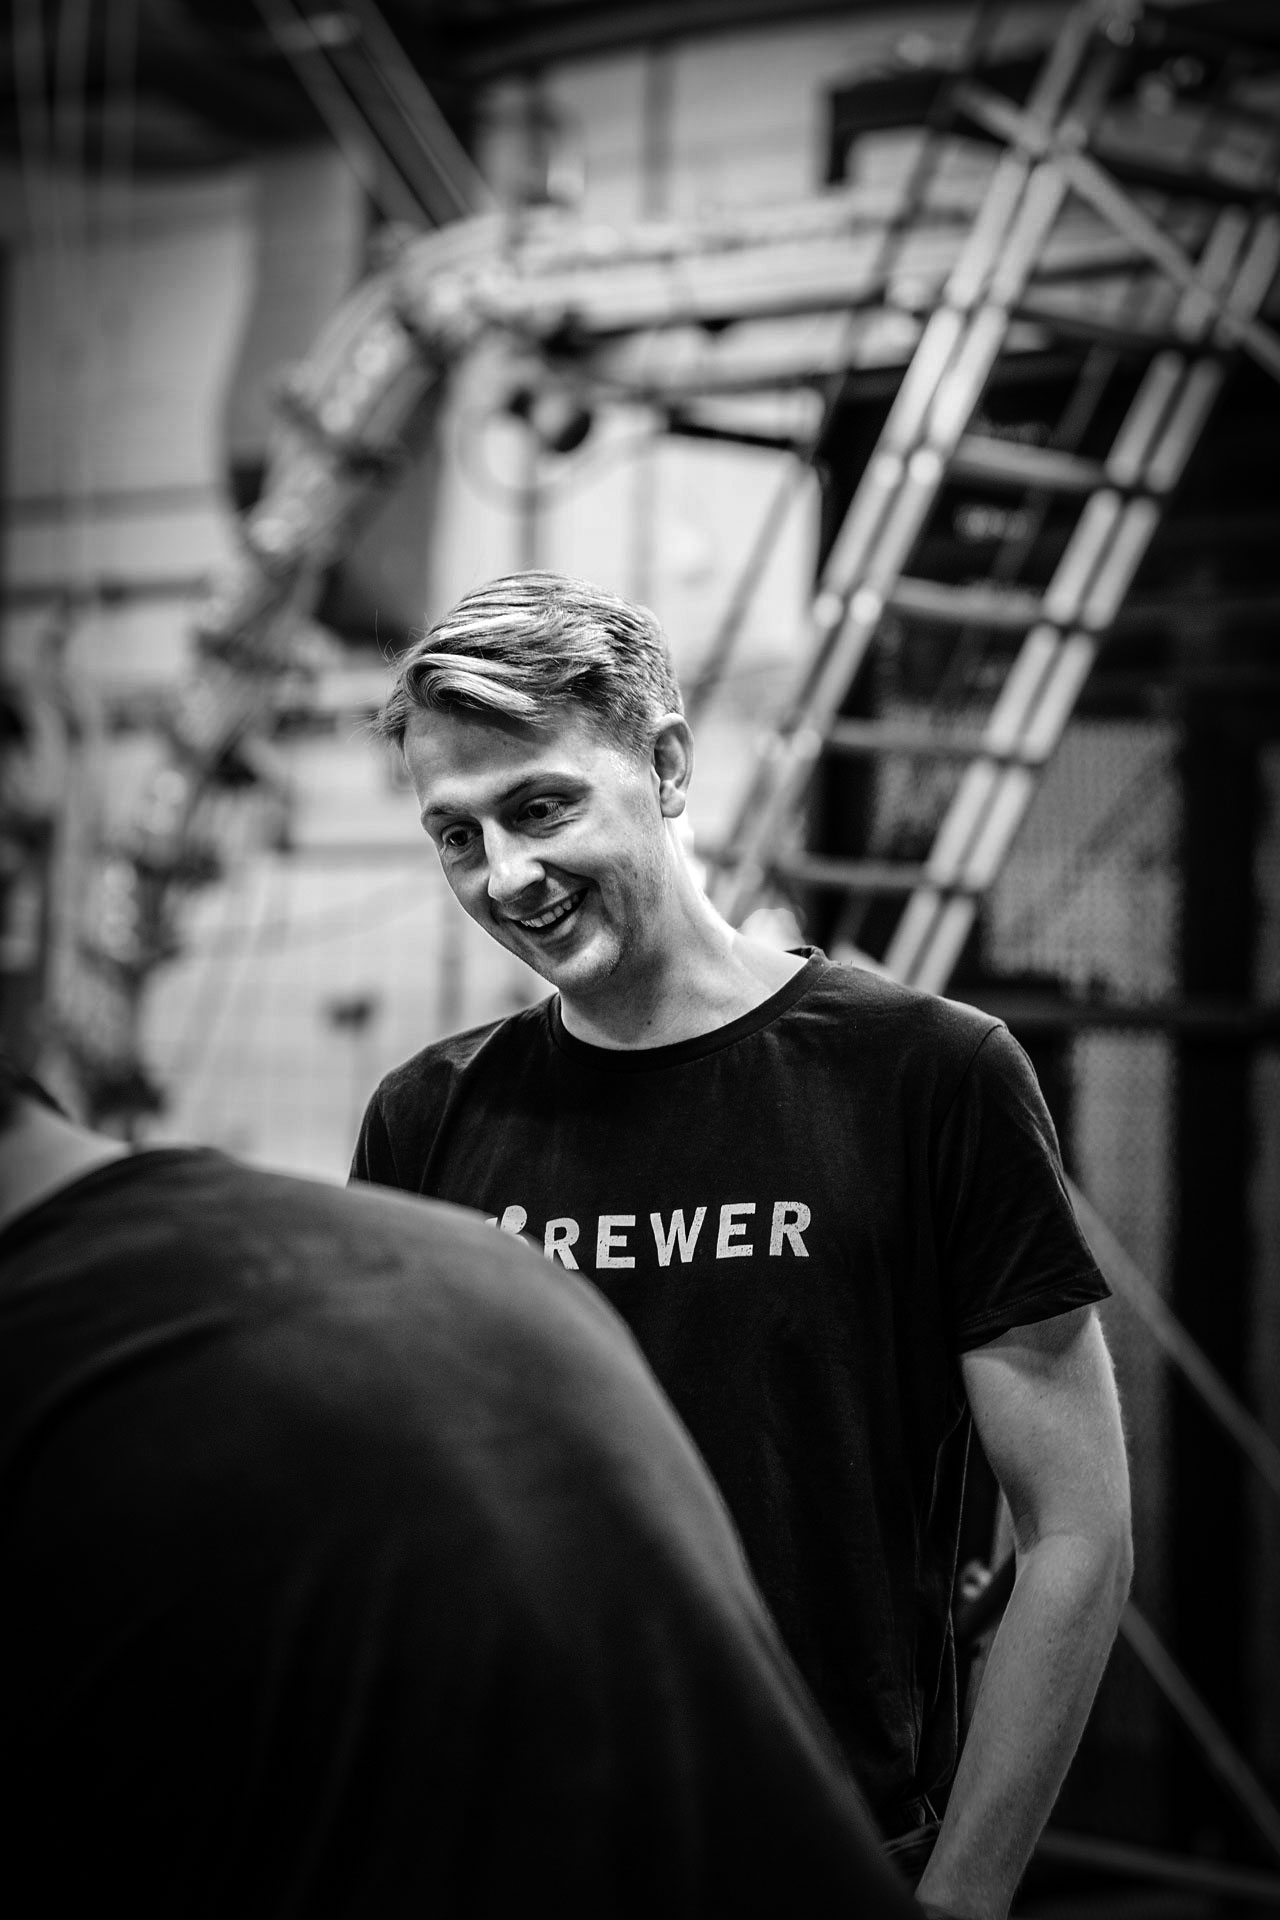 Johan Hesselberg, the latest brewery intern at Beerbliotek, a Swedish Craft Beer Brewery in Gothenburg.